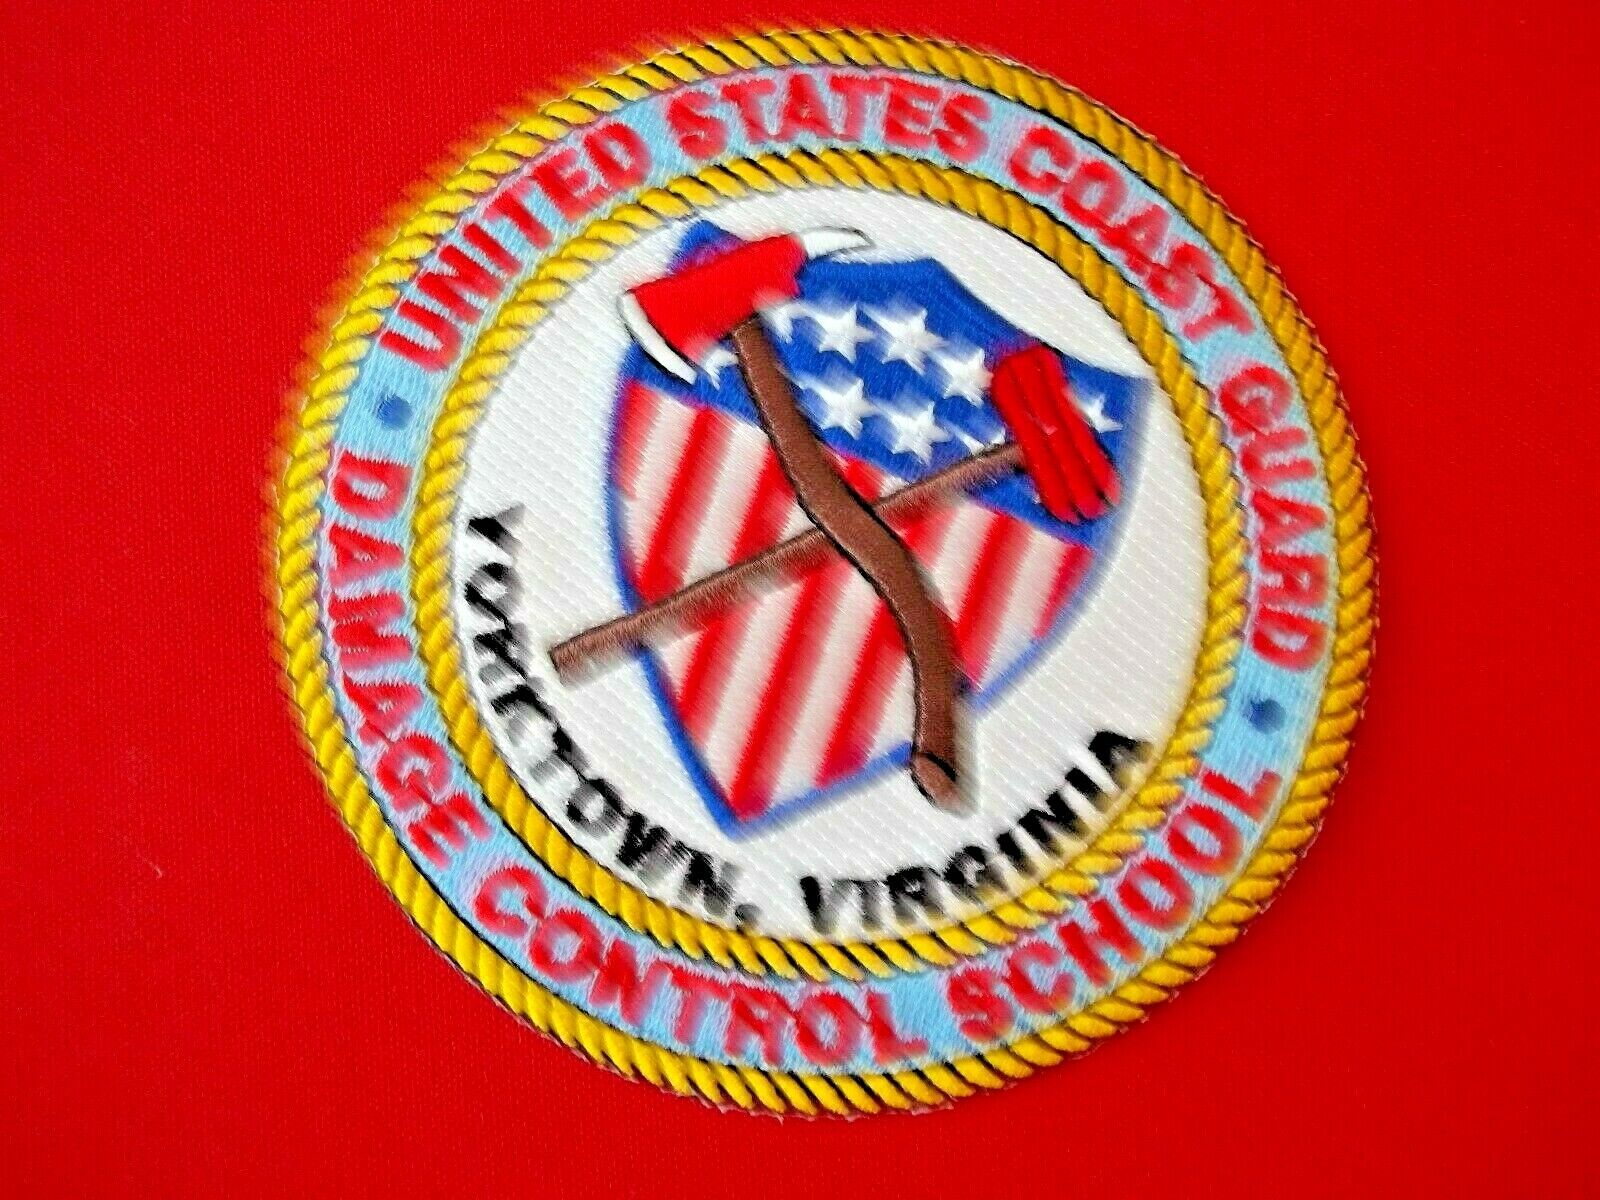 United States Coast Guard USCG patch Yorktown VA Damage Control School #1008